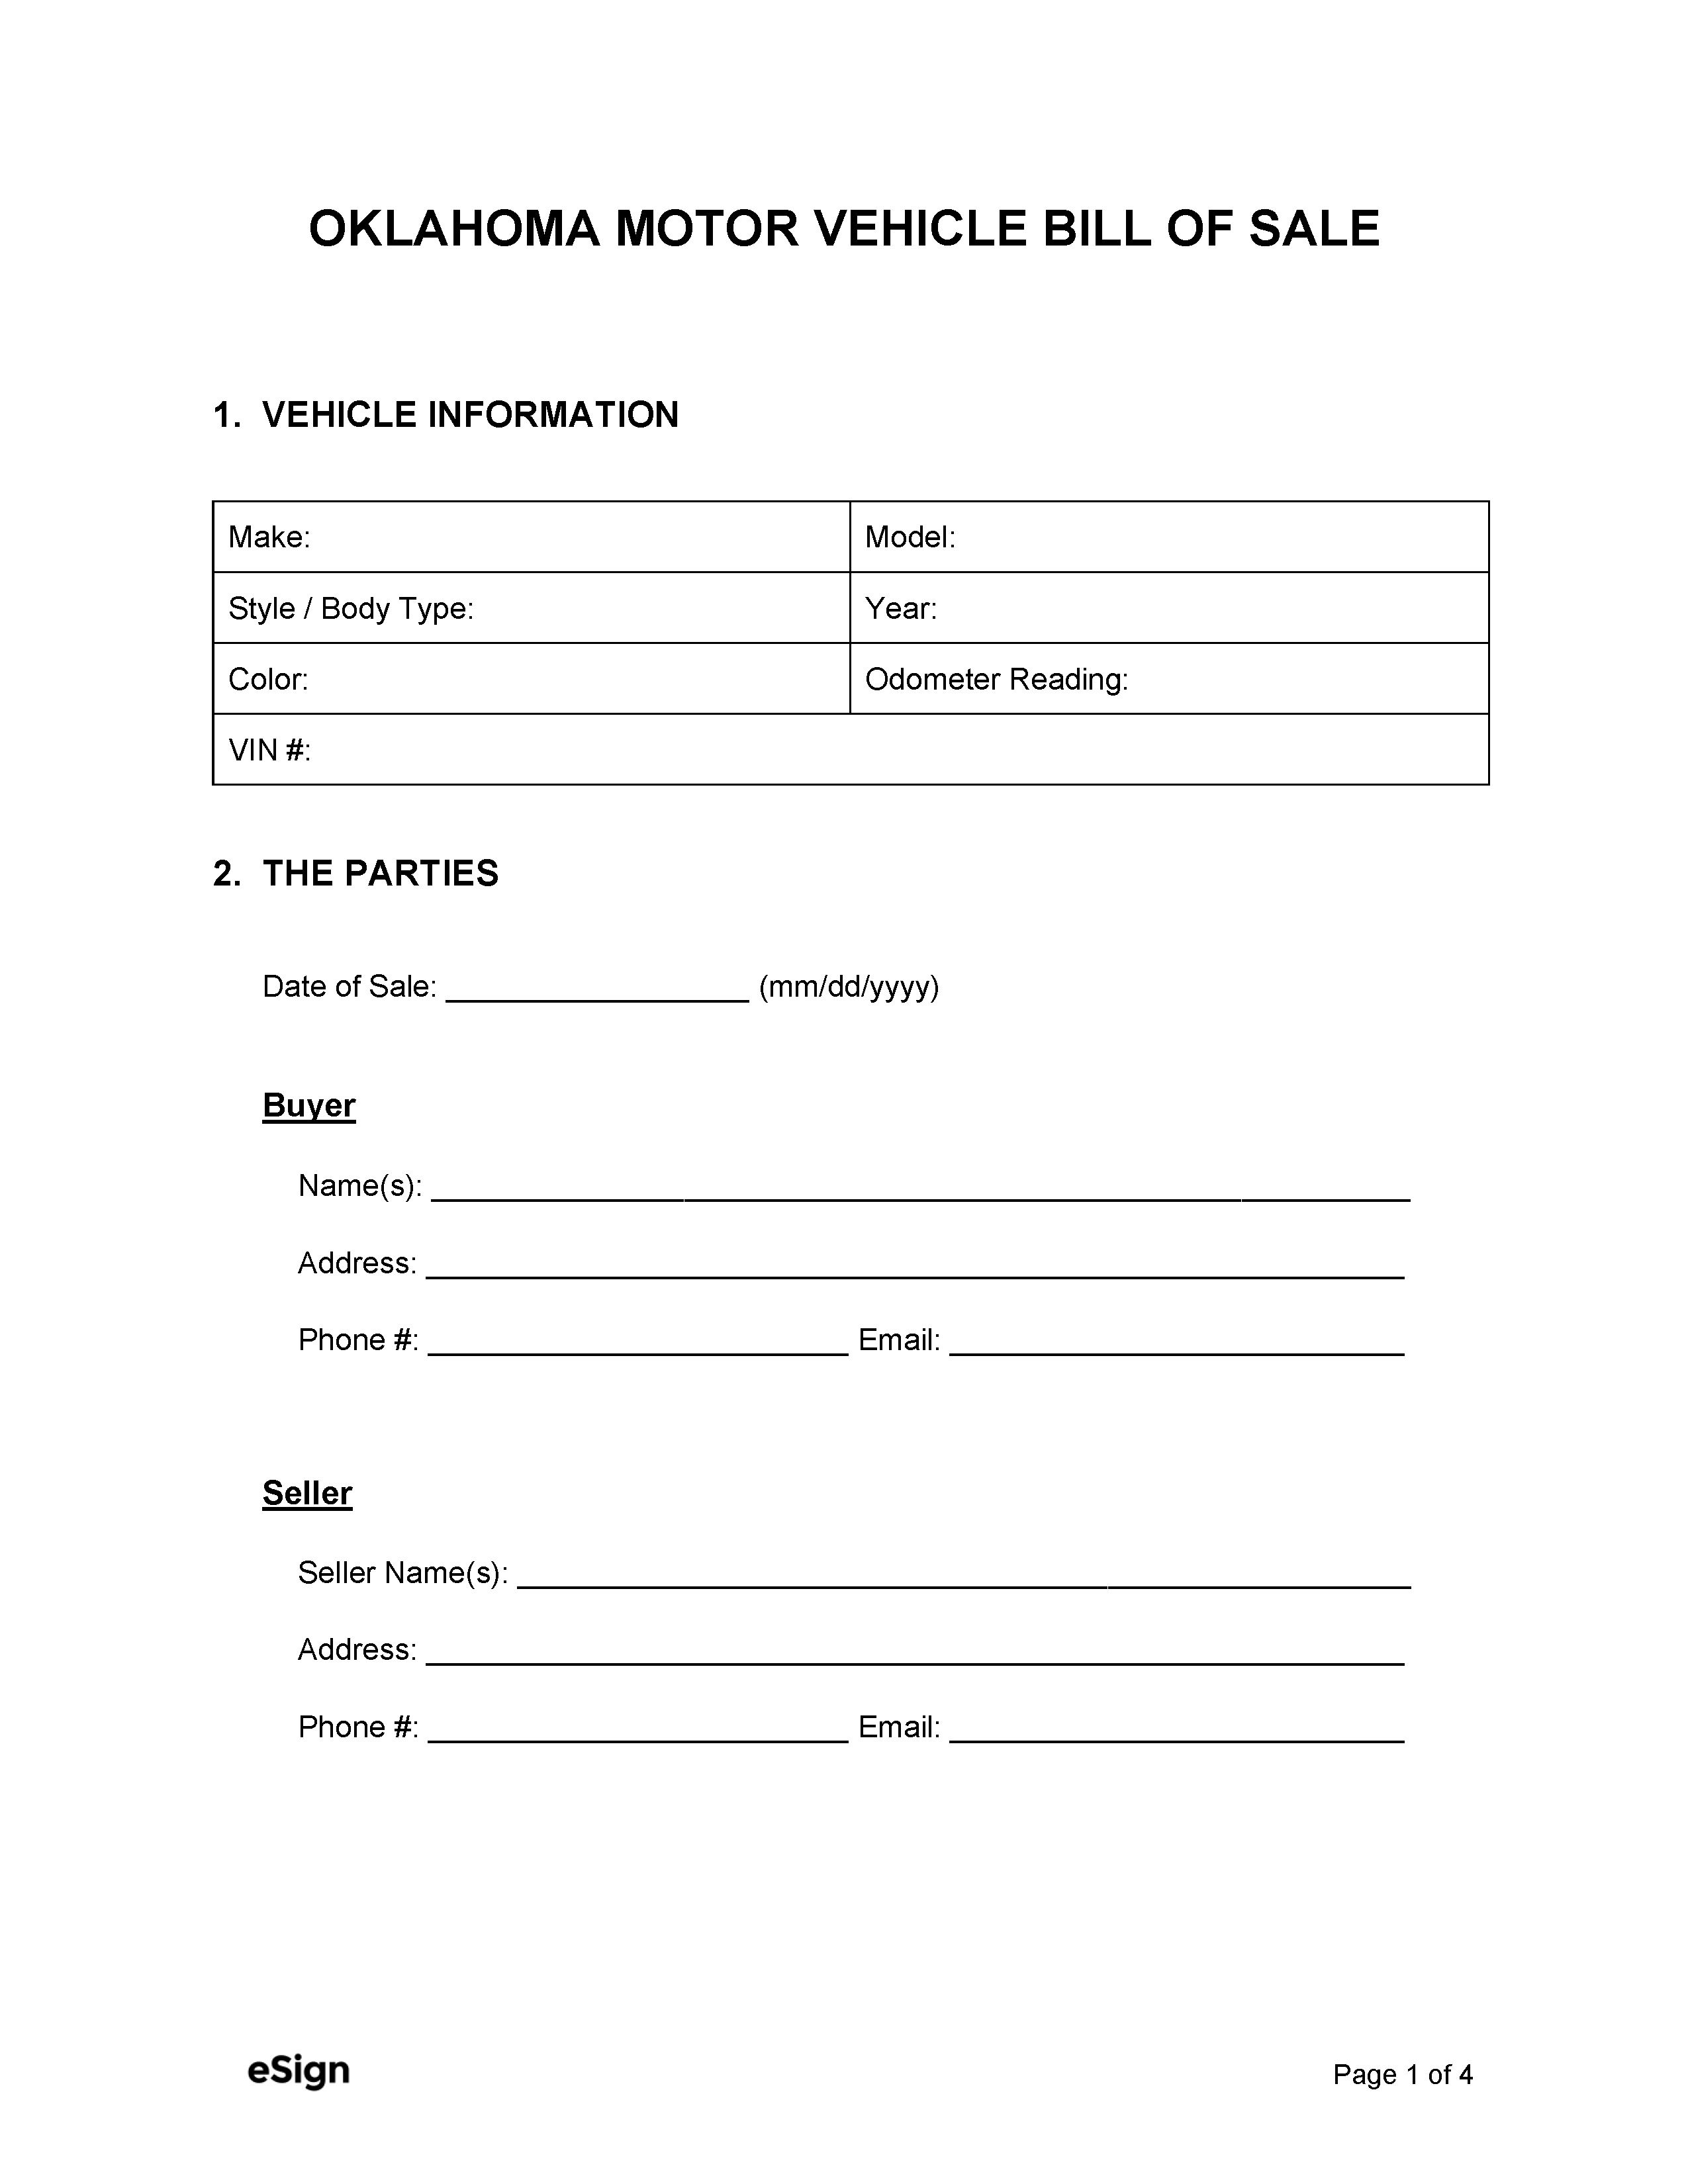 Free Oklahoma Motor Vehicle Bill of Sale Form - PDF  Word Intended For Vehicle Bill Of Sale Template Word